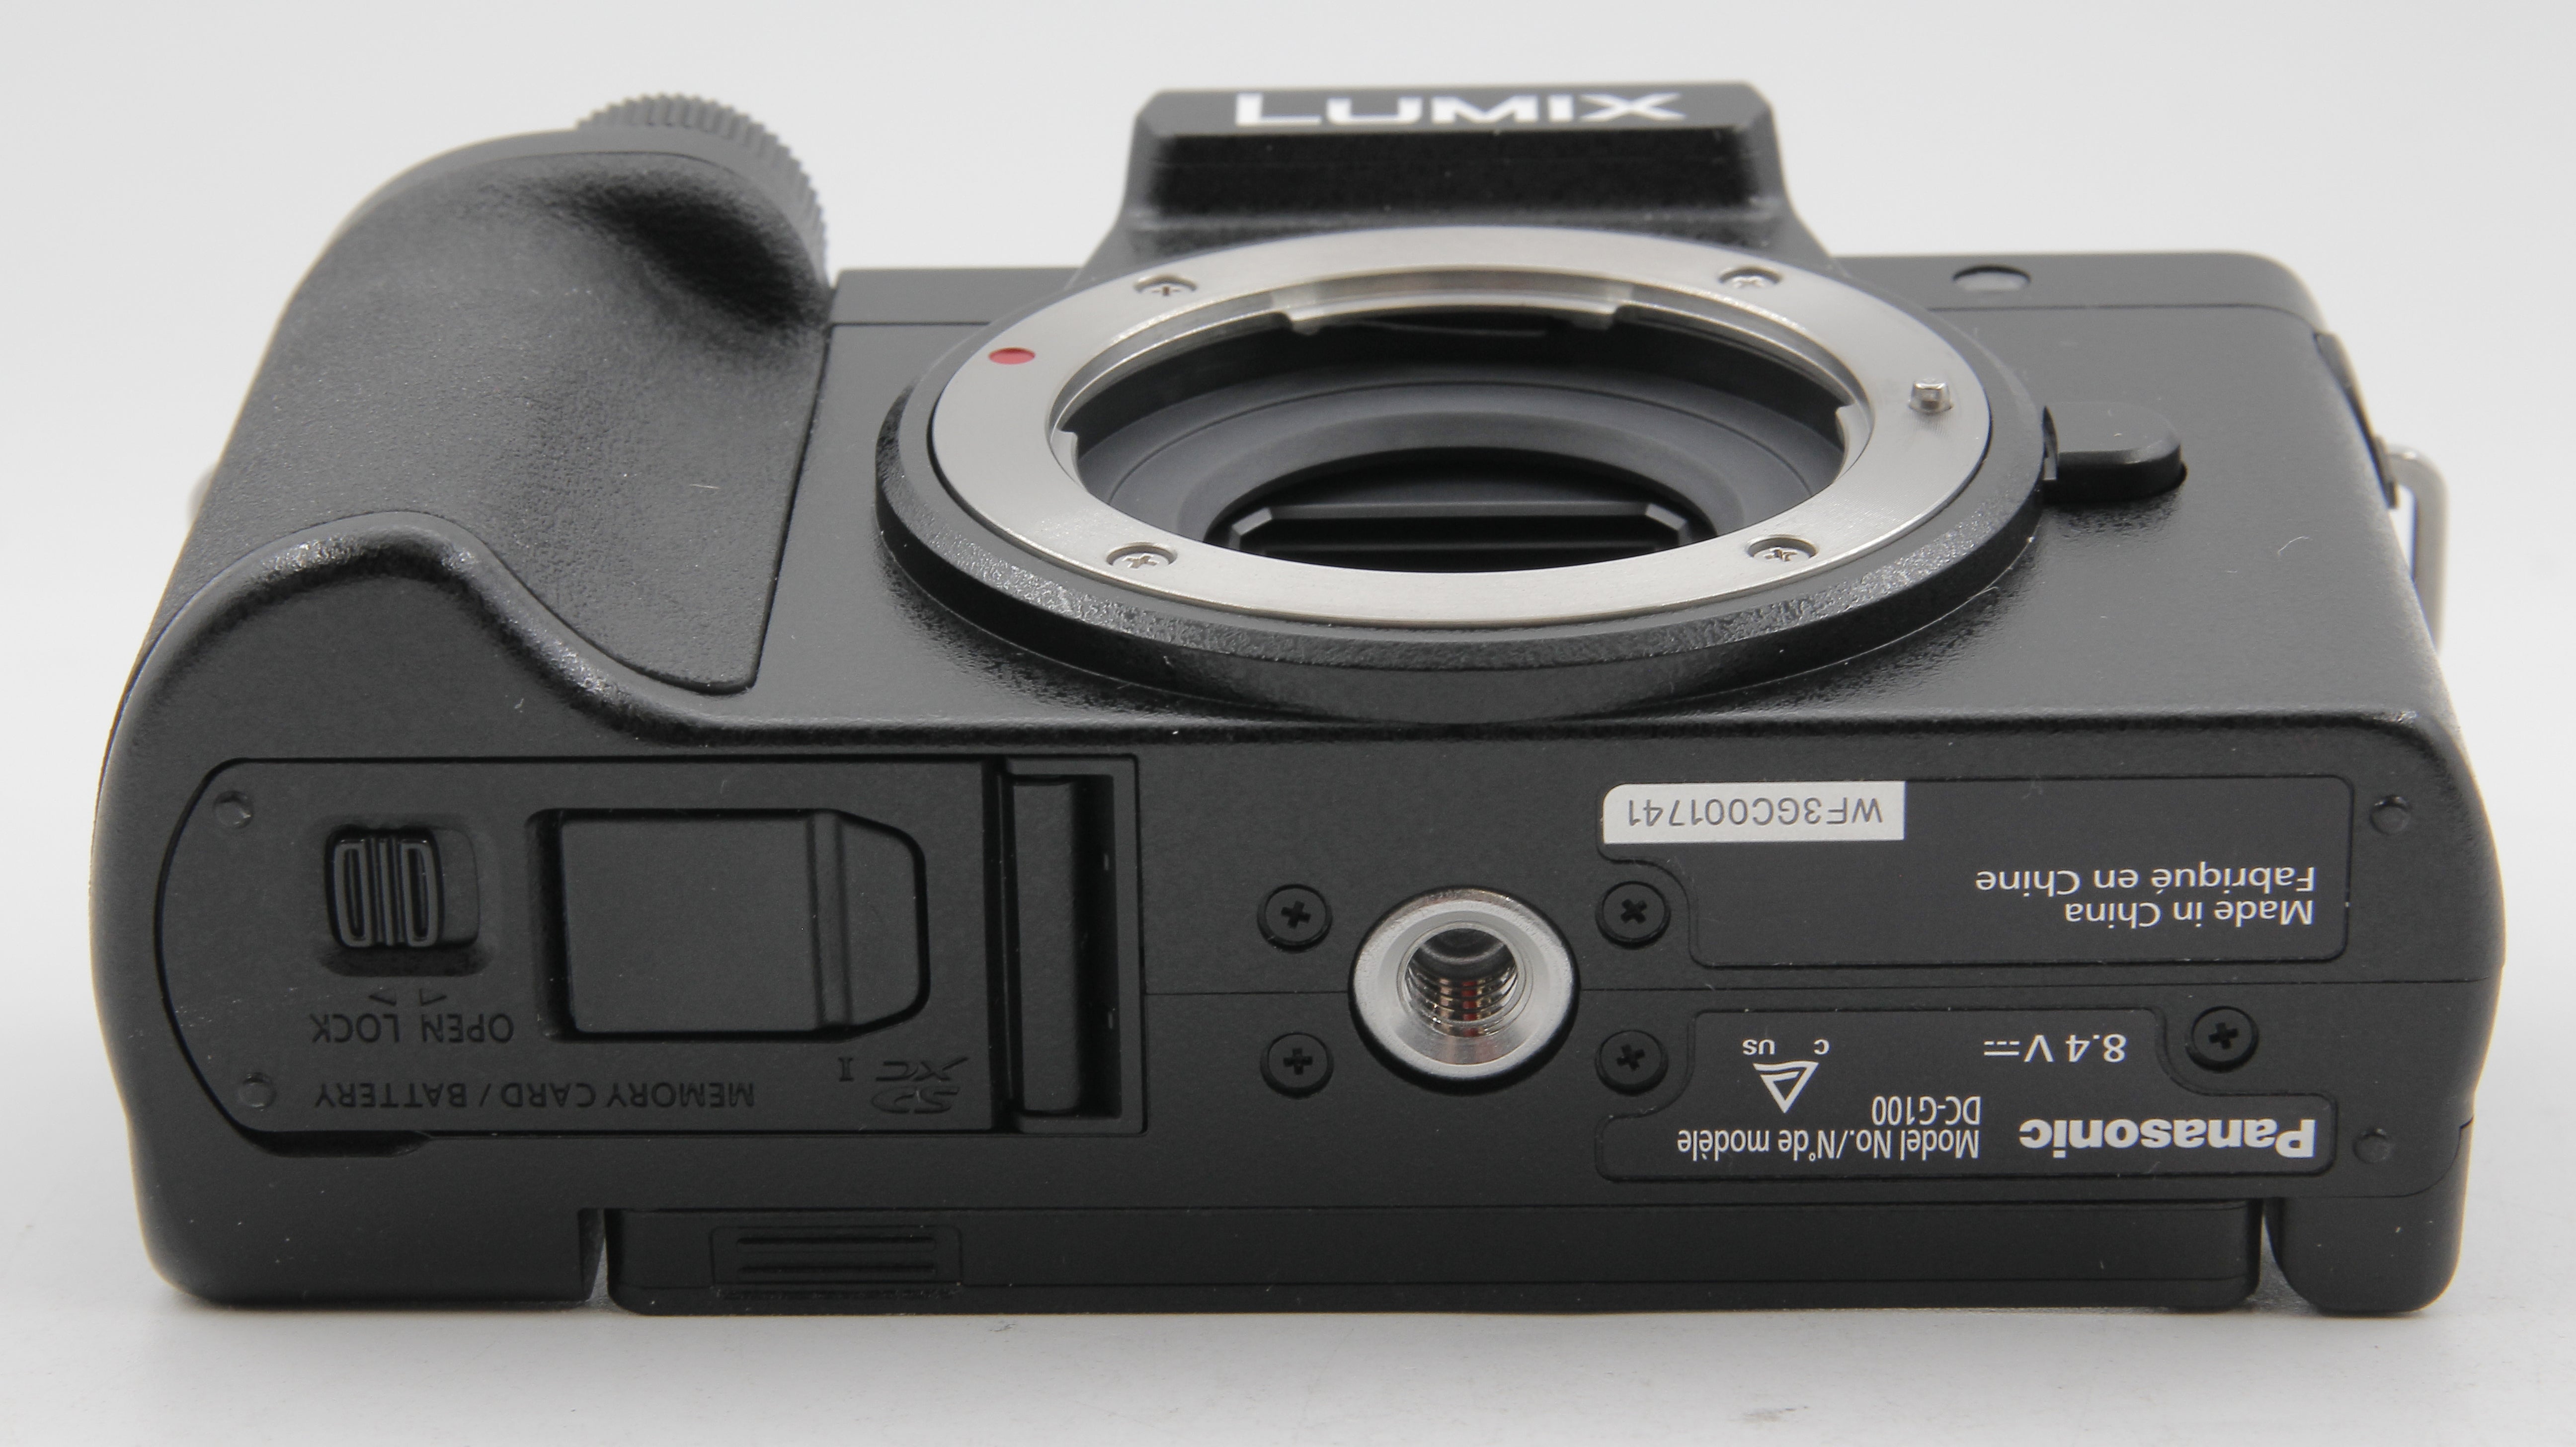 *** OPENBOX GOOD *** Panasonic Lumix DC-G100 Mirrorless Digital Camera with 12-32mm Lens